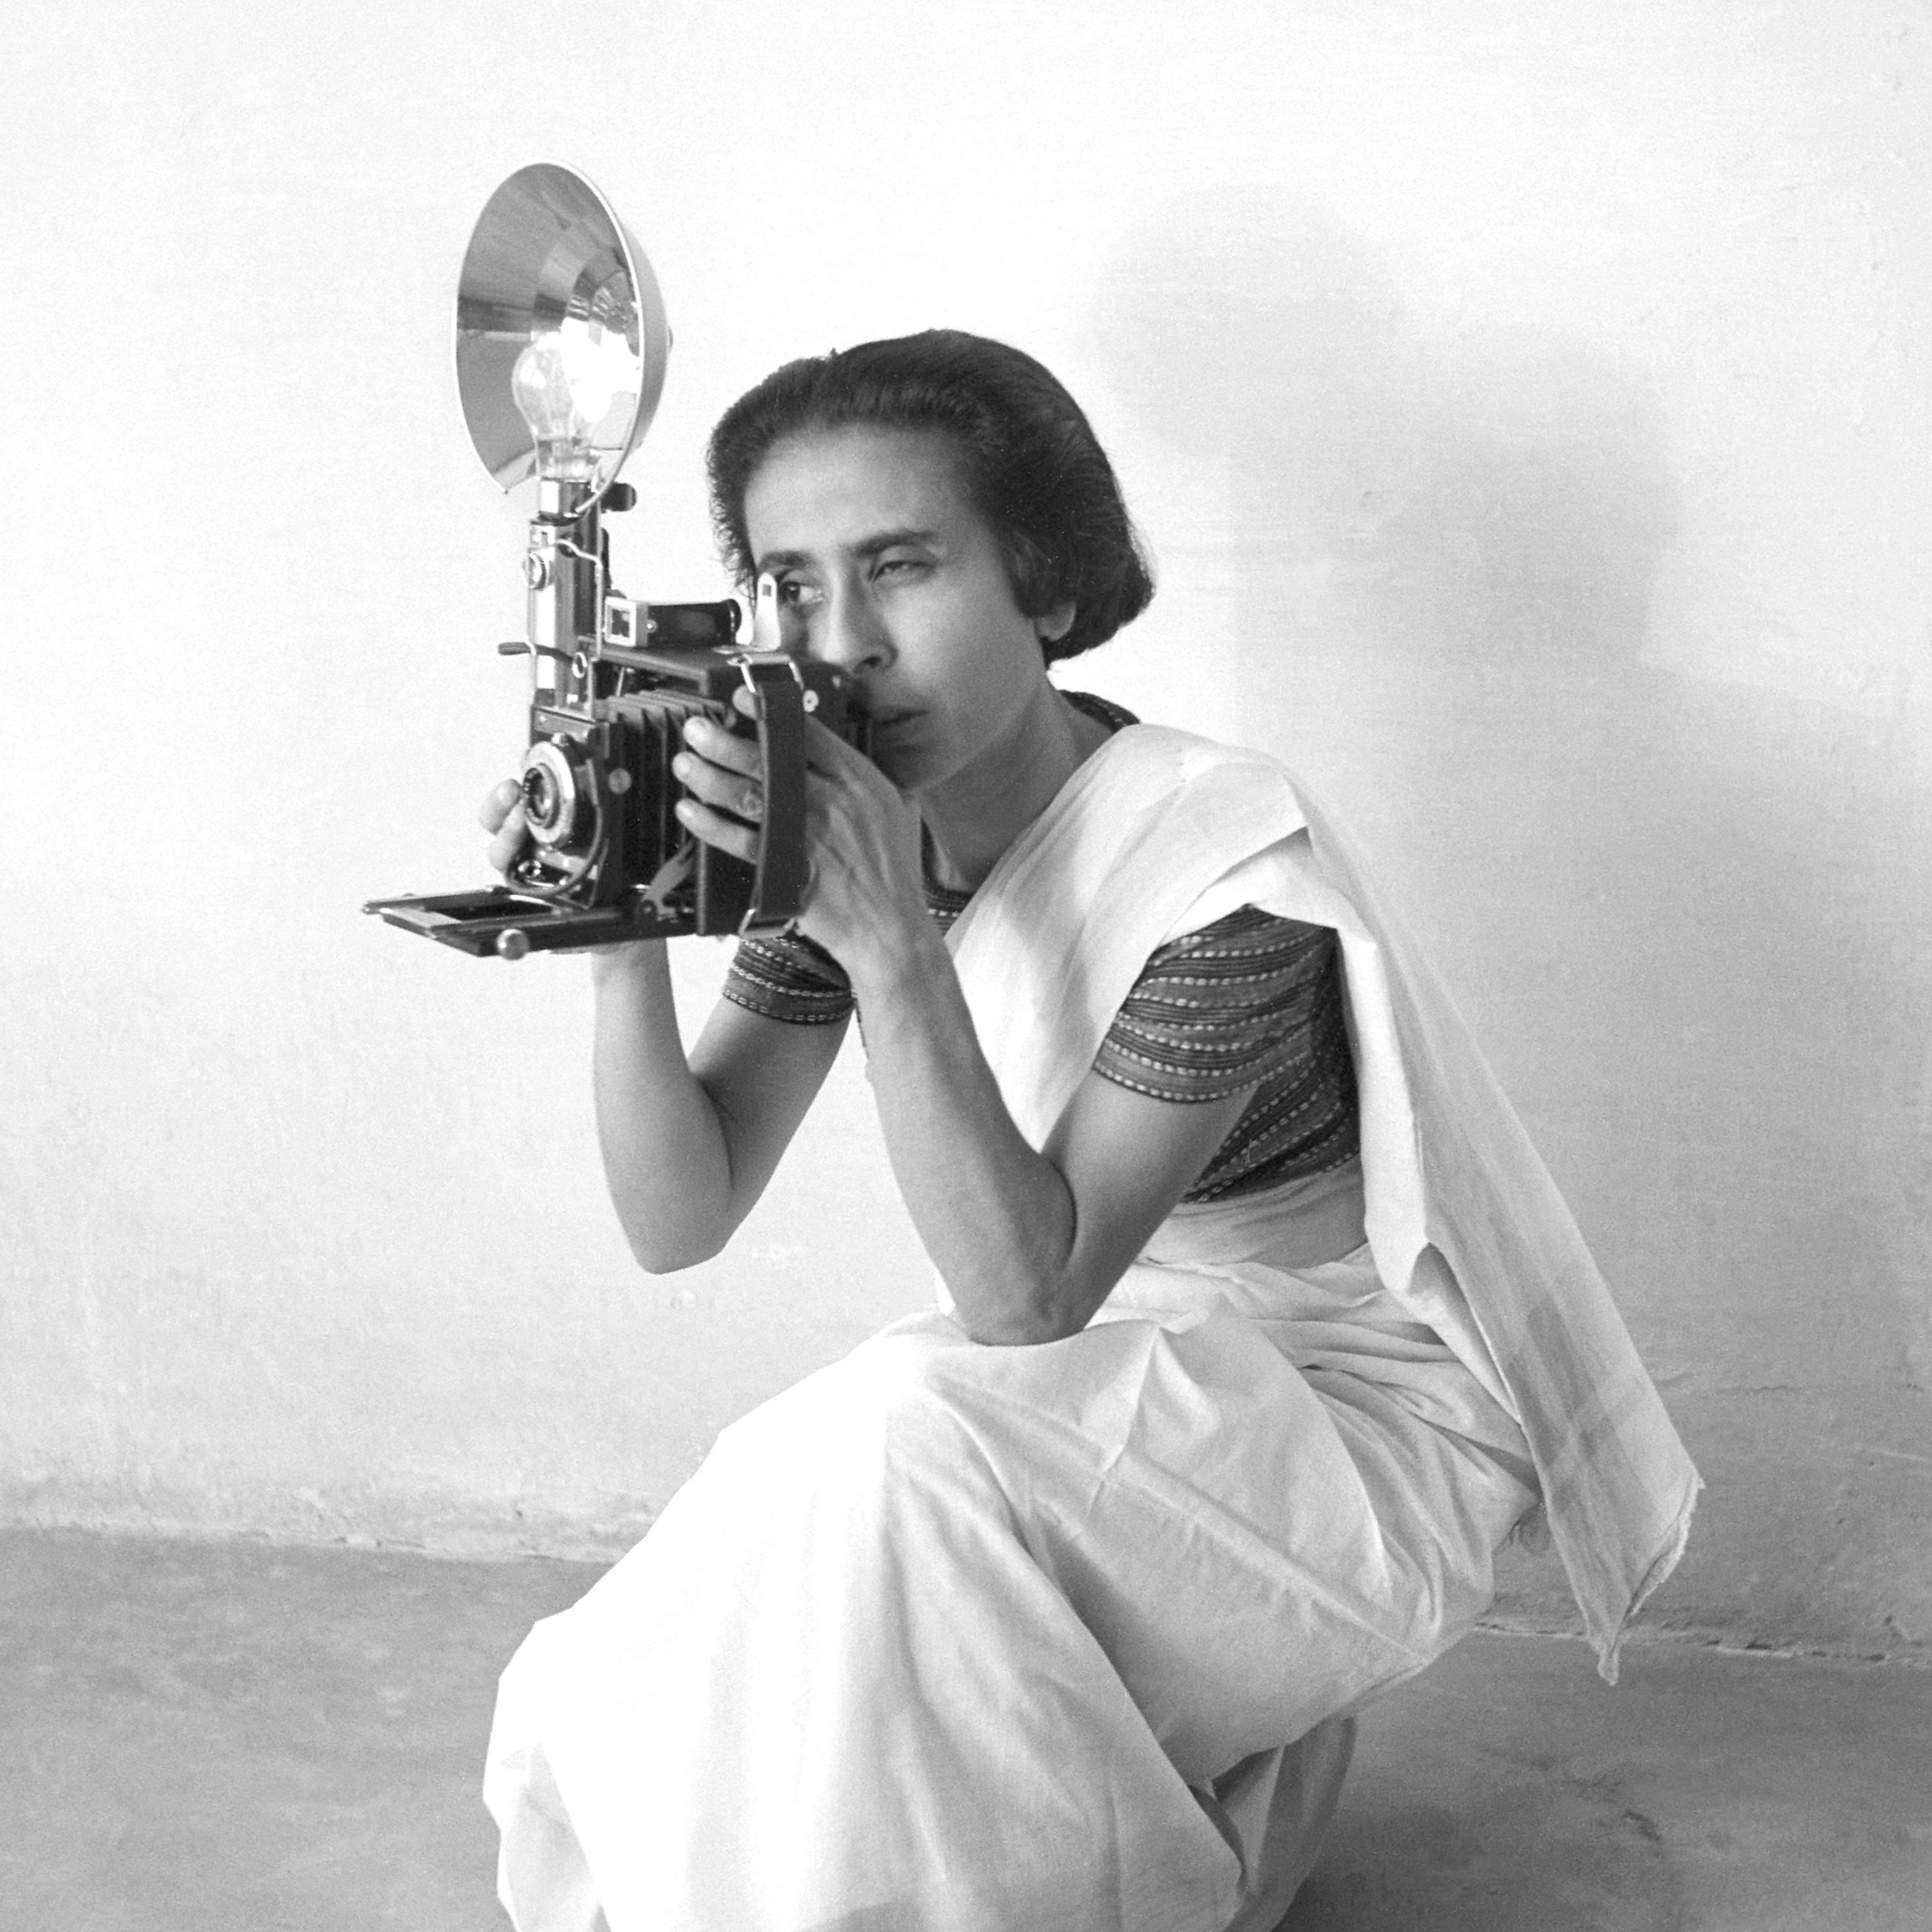 Reza photojournalist. Photojournalist. Her story iconic women in History.